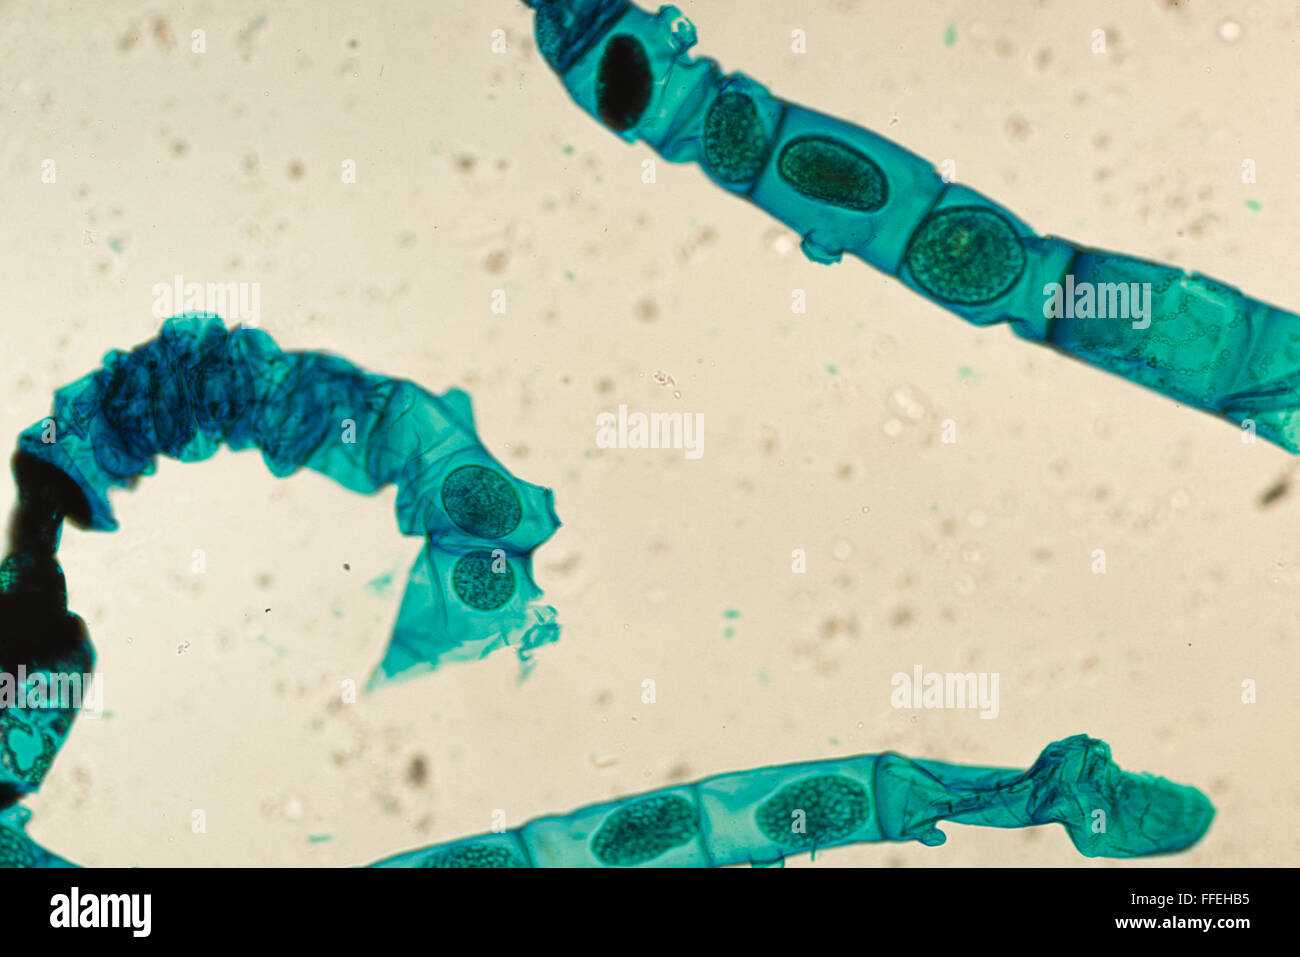 Microscopic image plant cells alga Stock Photo